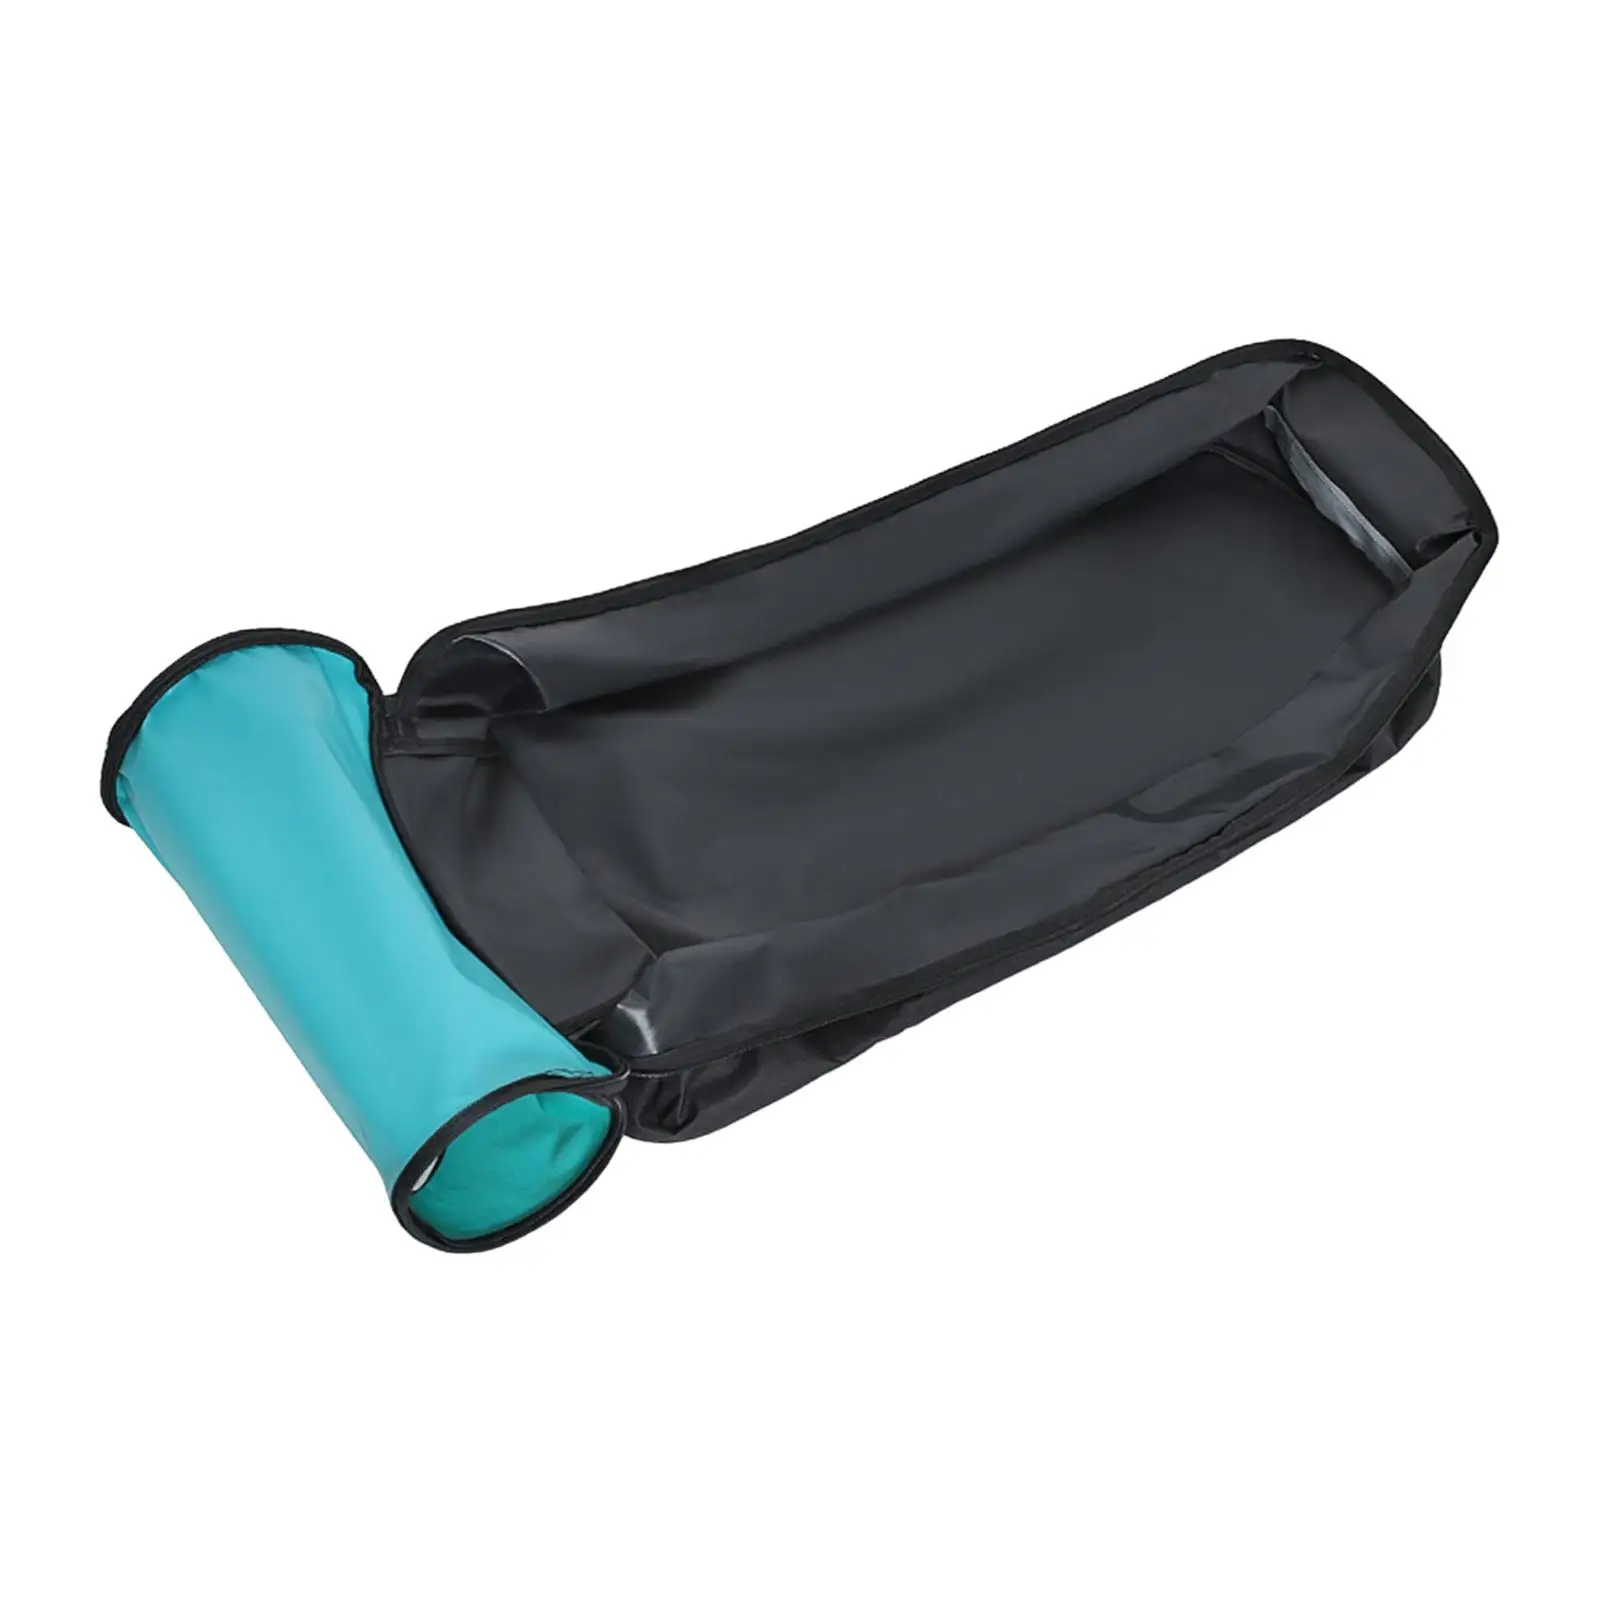 Inflatable Paddle Board Bag Lightweight Adjustable Straps Premium Handbag Stand up Paddle Board Backpack for Outdoor Surfboard